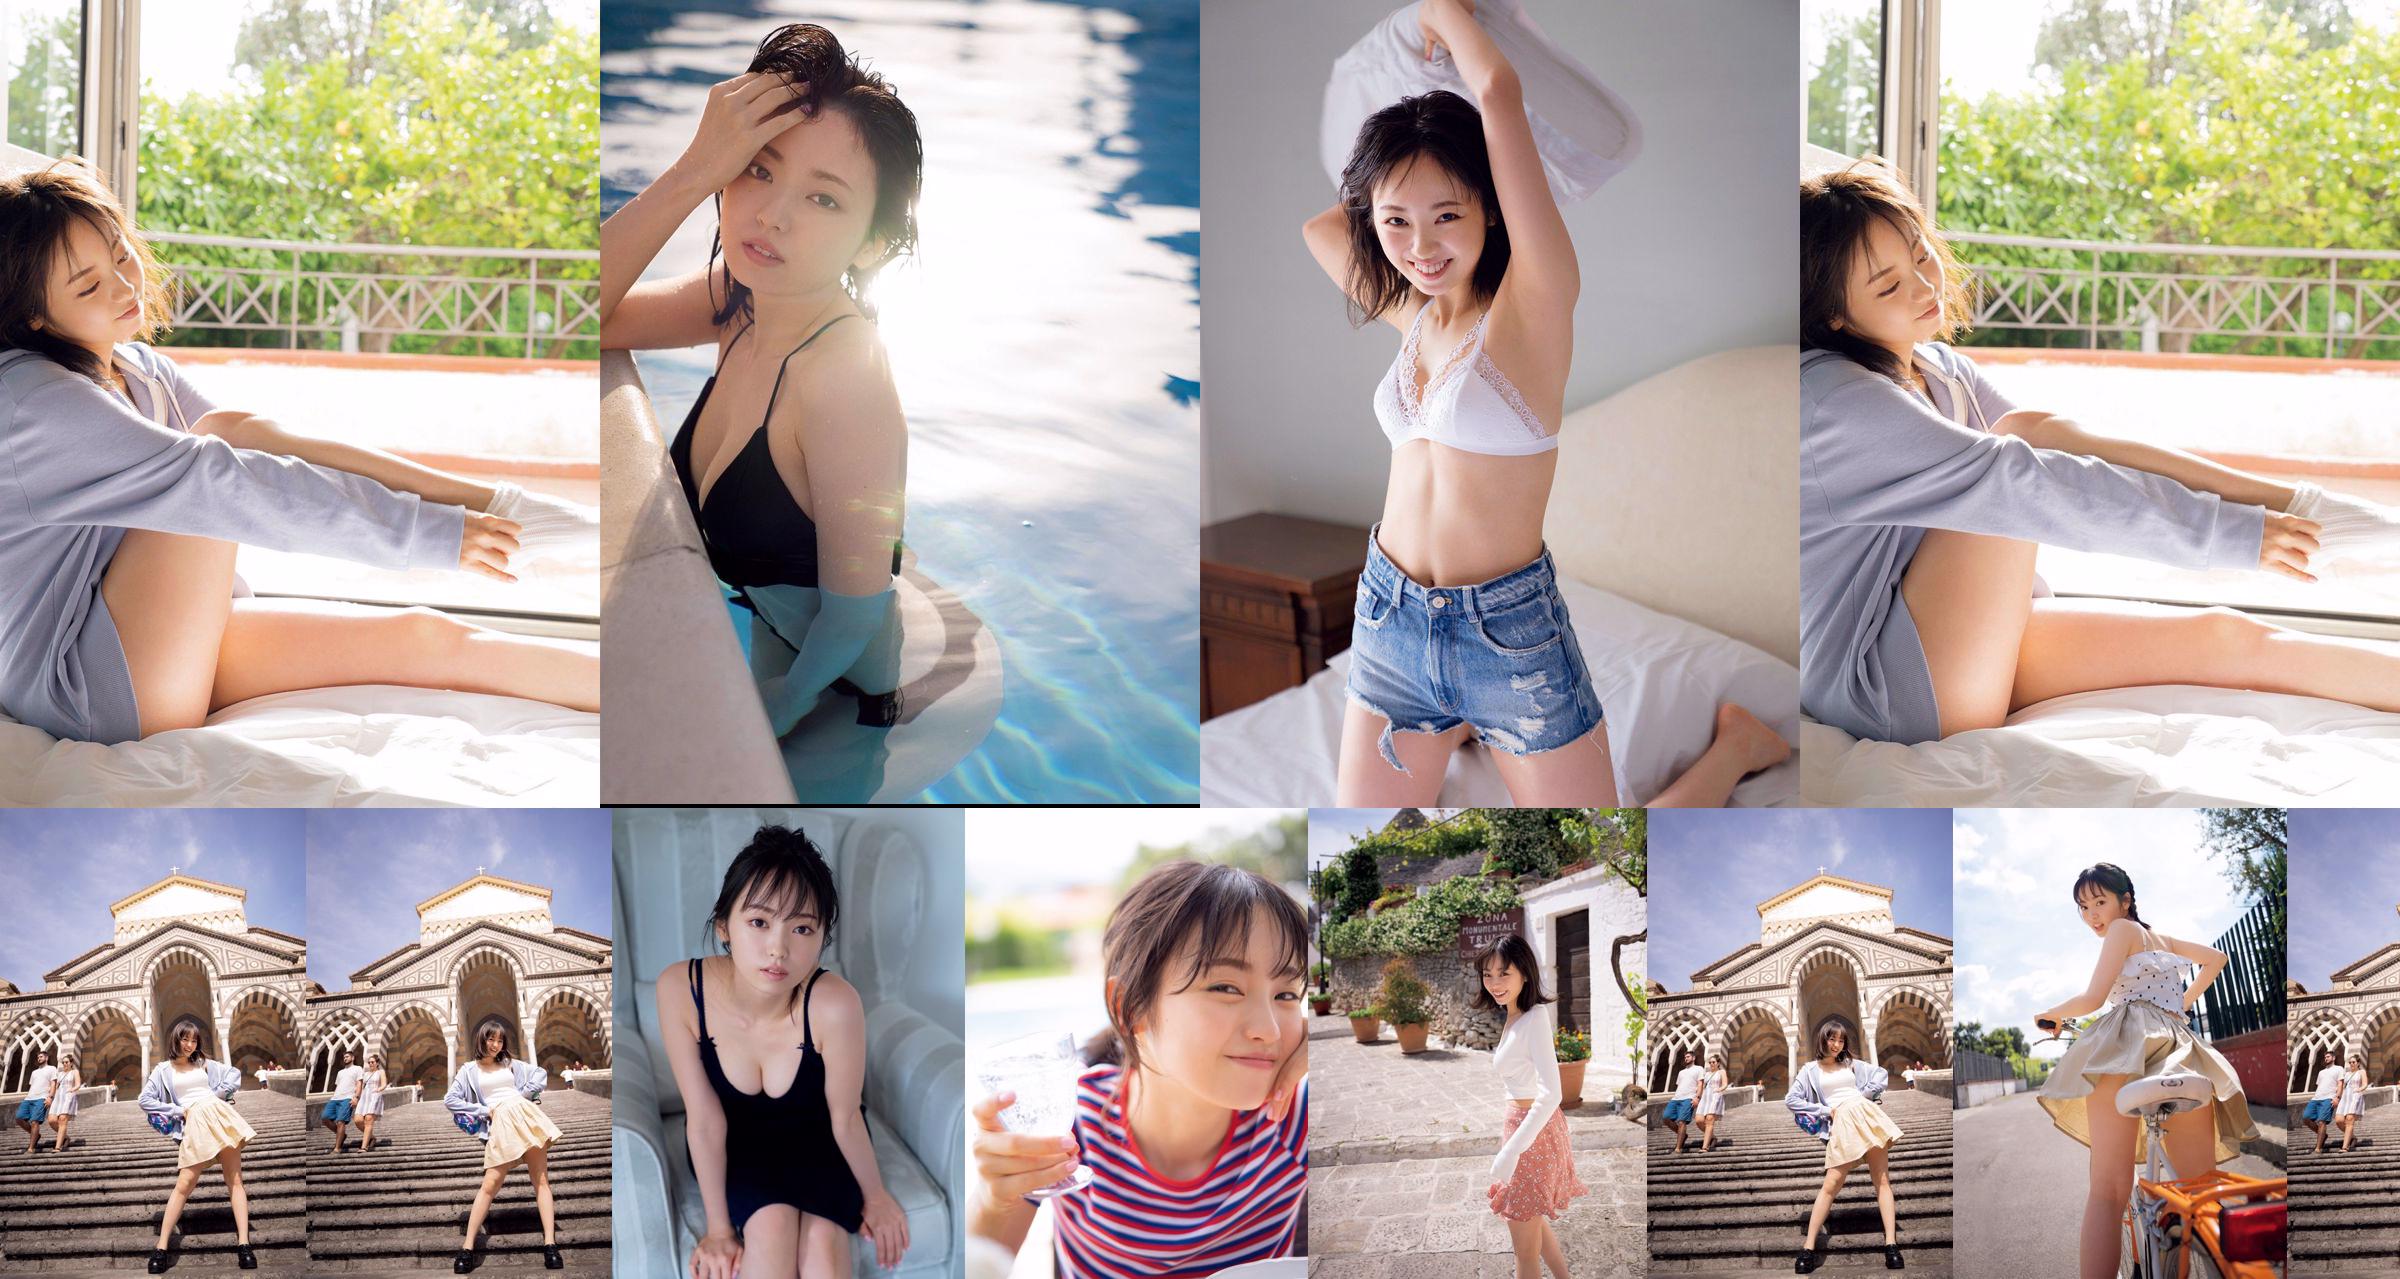 [FRIDAY] Keyakizaka46, Yui Imaizumi "Swimsuit & Lingerie of" First and Last! "" Photo No.a900fa Page 4